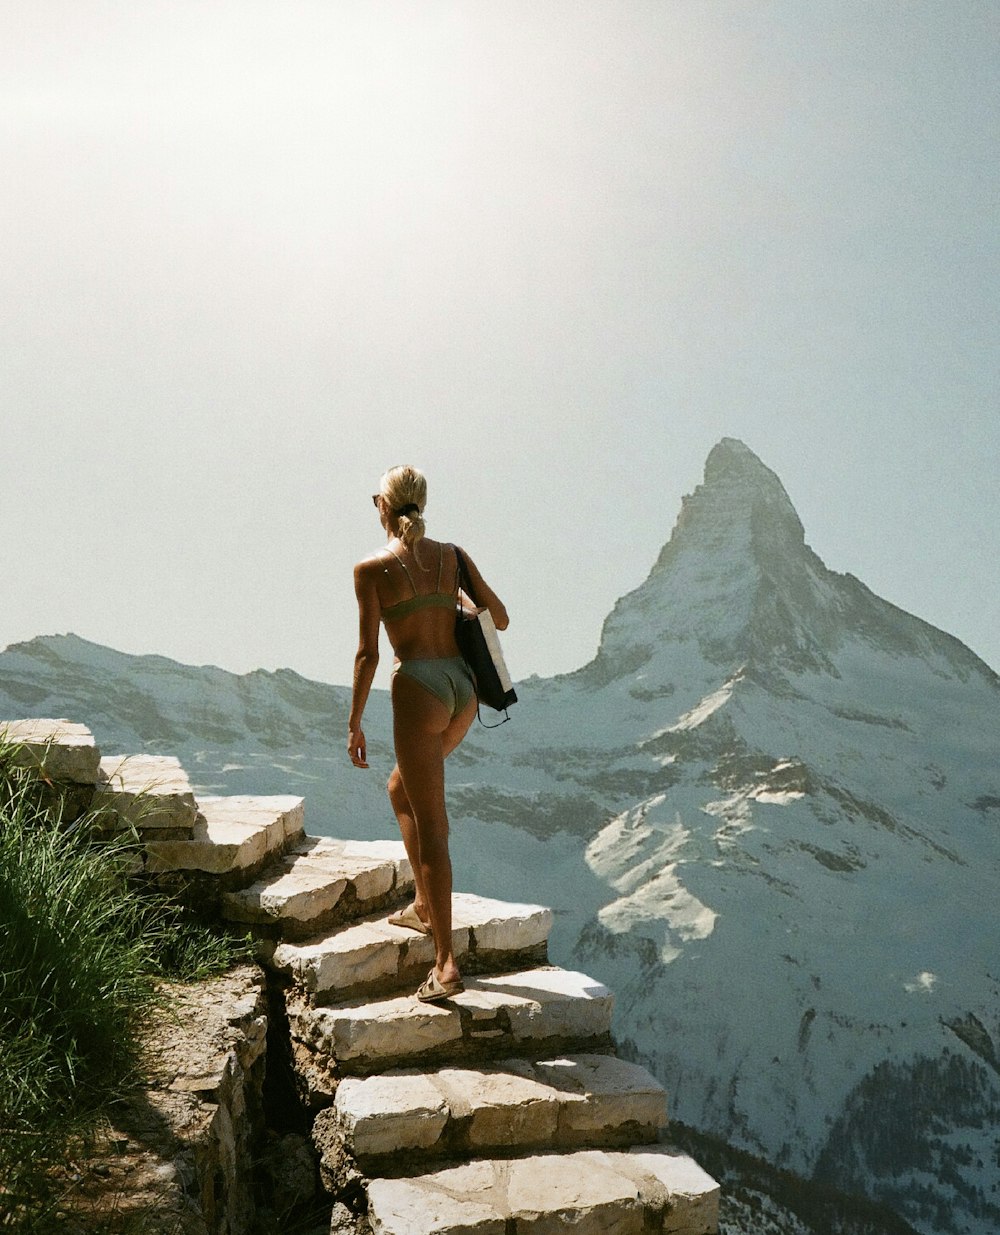 a woman in a bikini walking up a rocky path